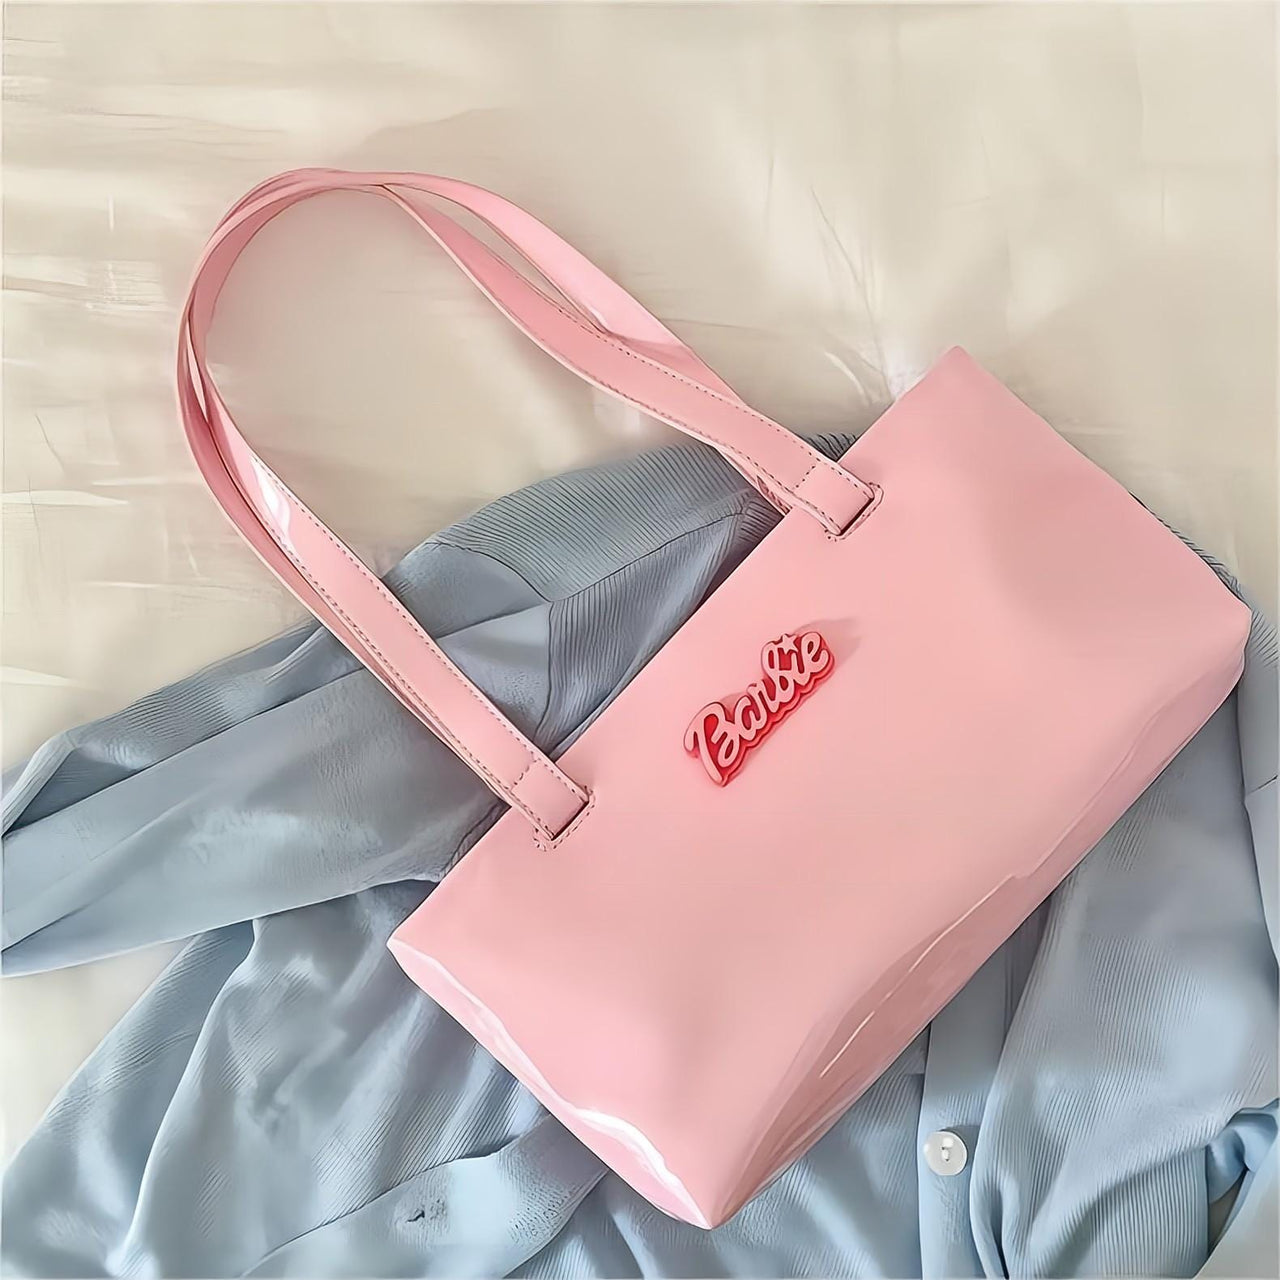 Vieta Light Pink Handbag / Purse Bag | eBay